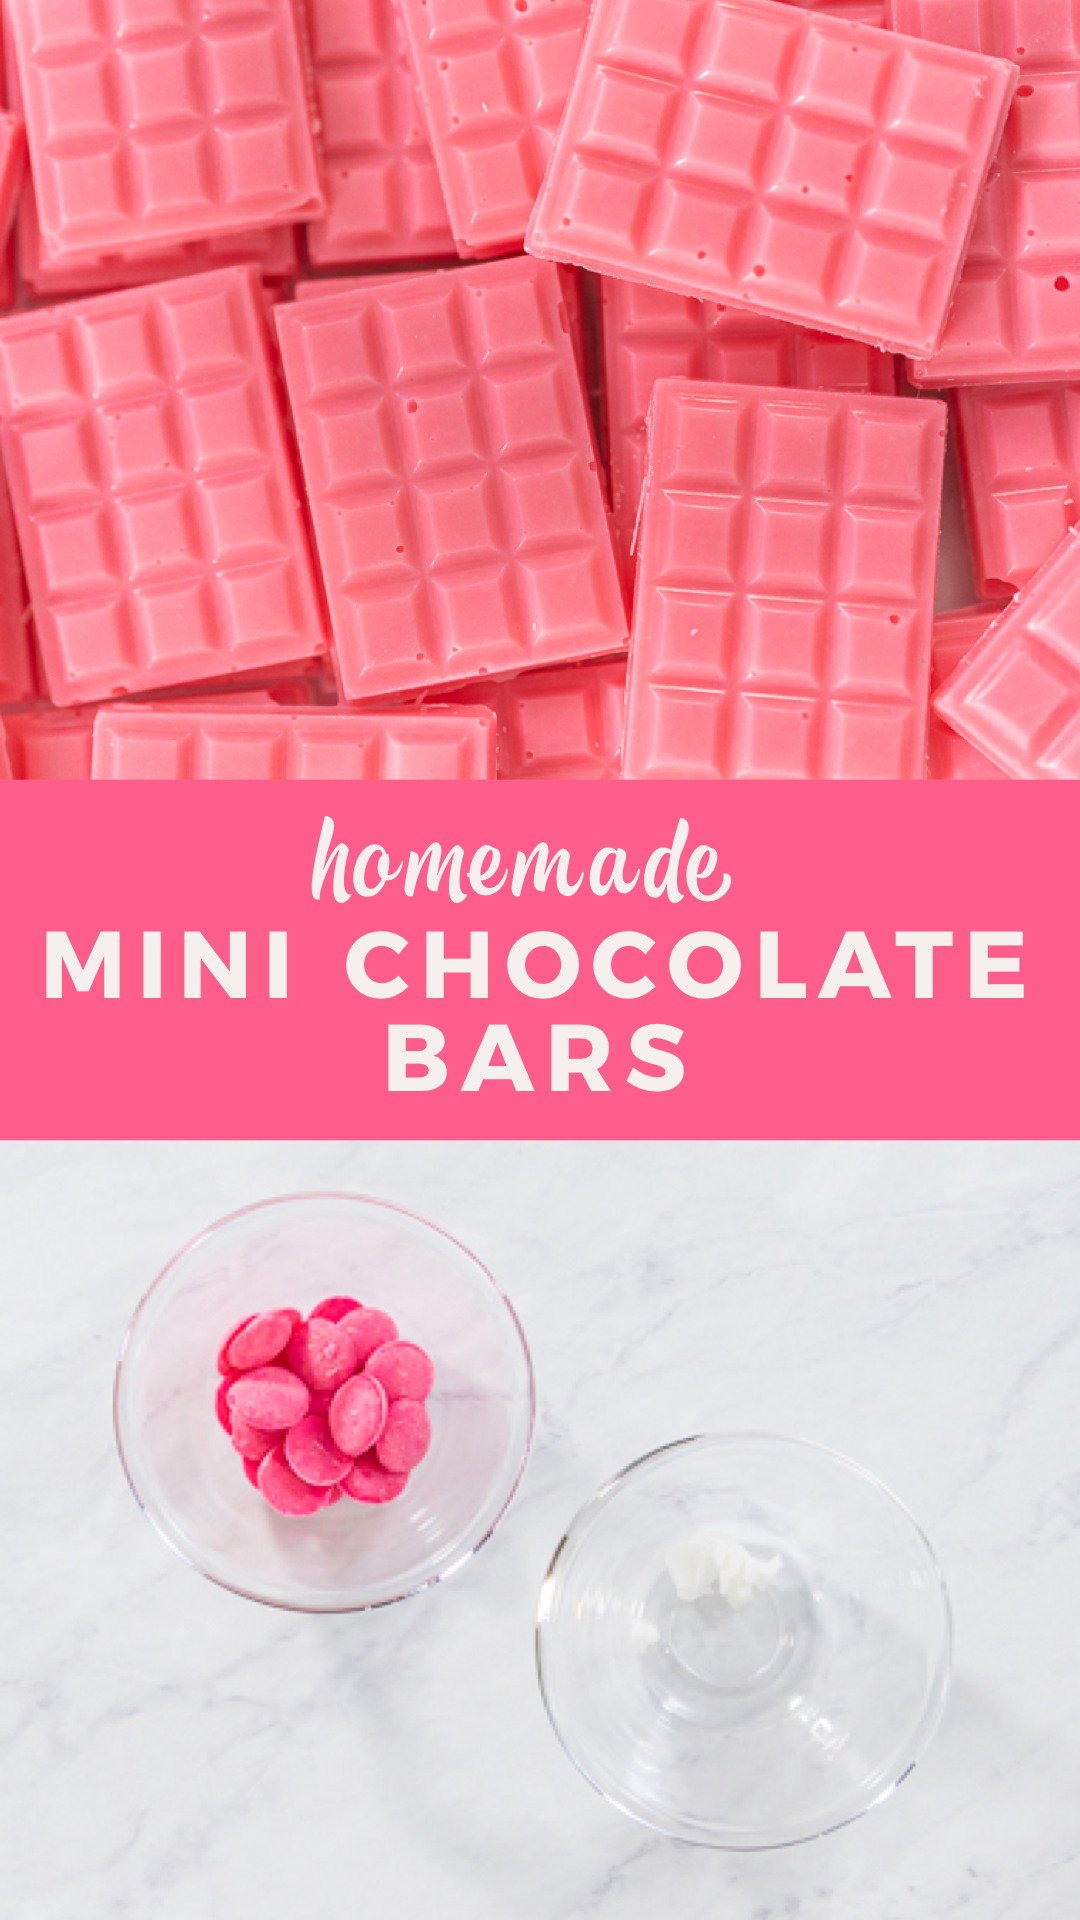 Homemade mini chocolate bars